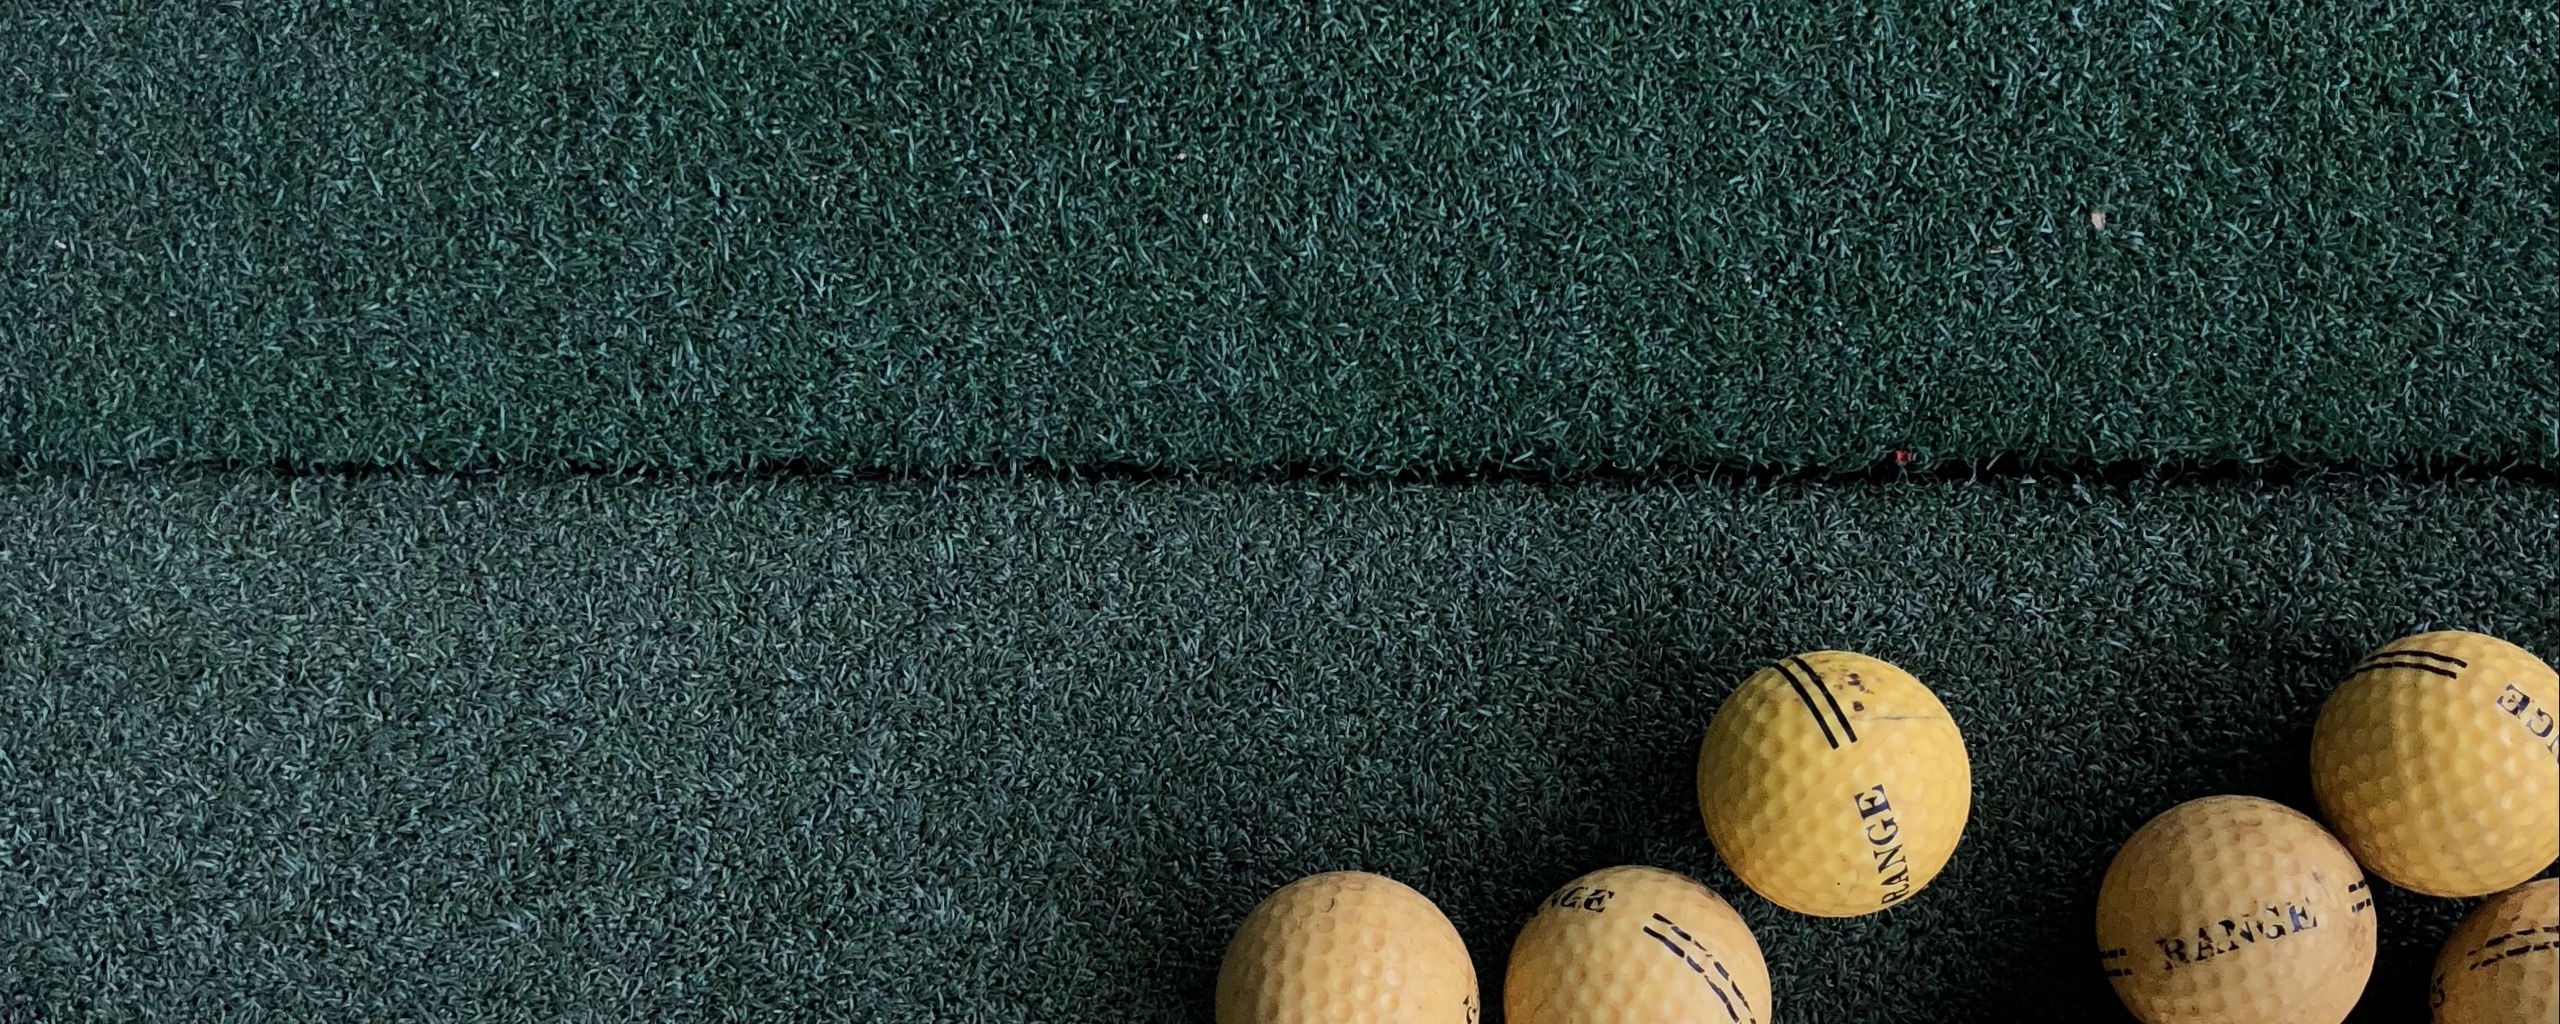 2560x1024 Wallpaper golf, balls, lawn, green, yellow